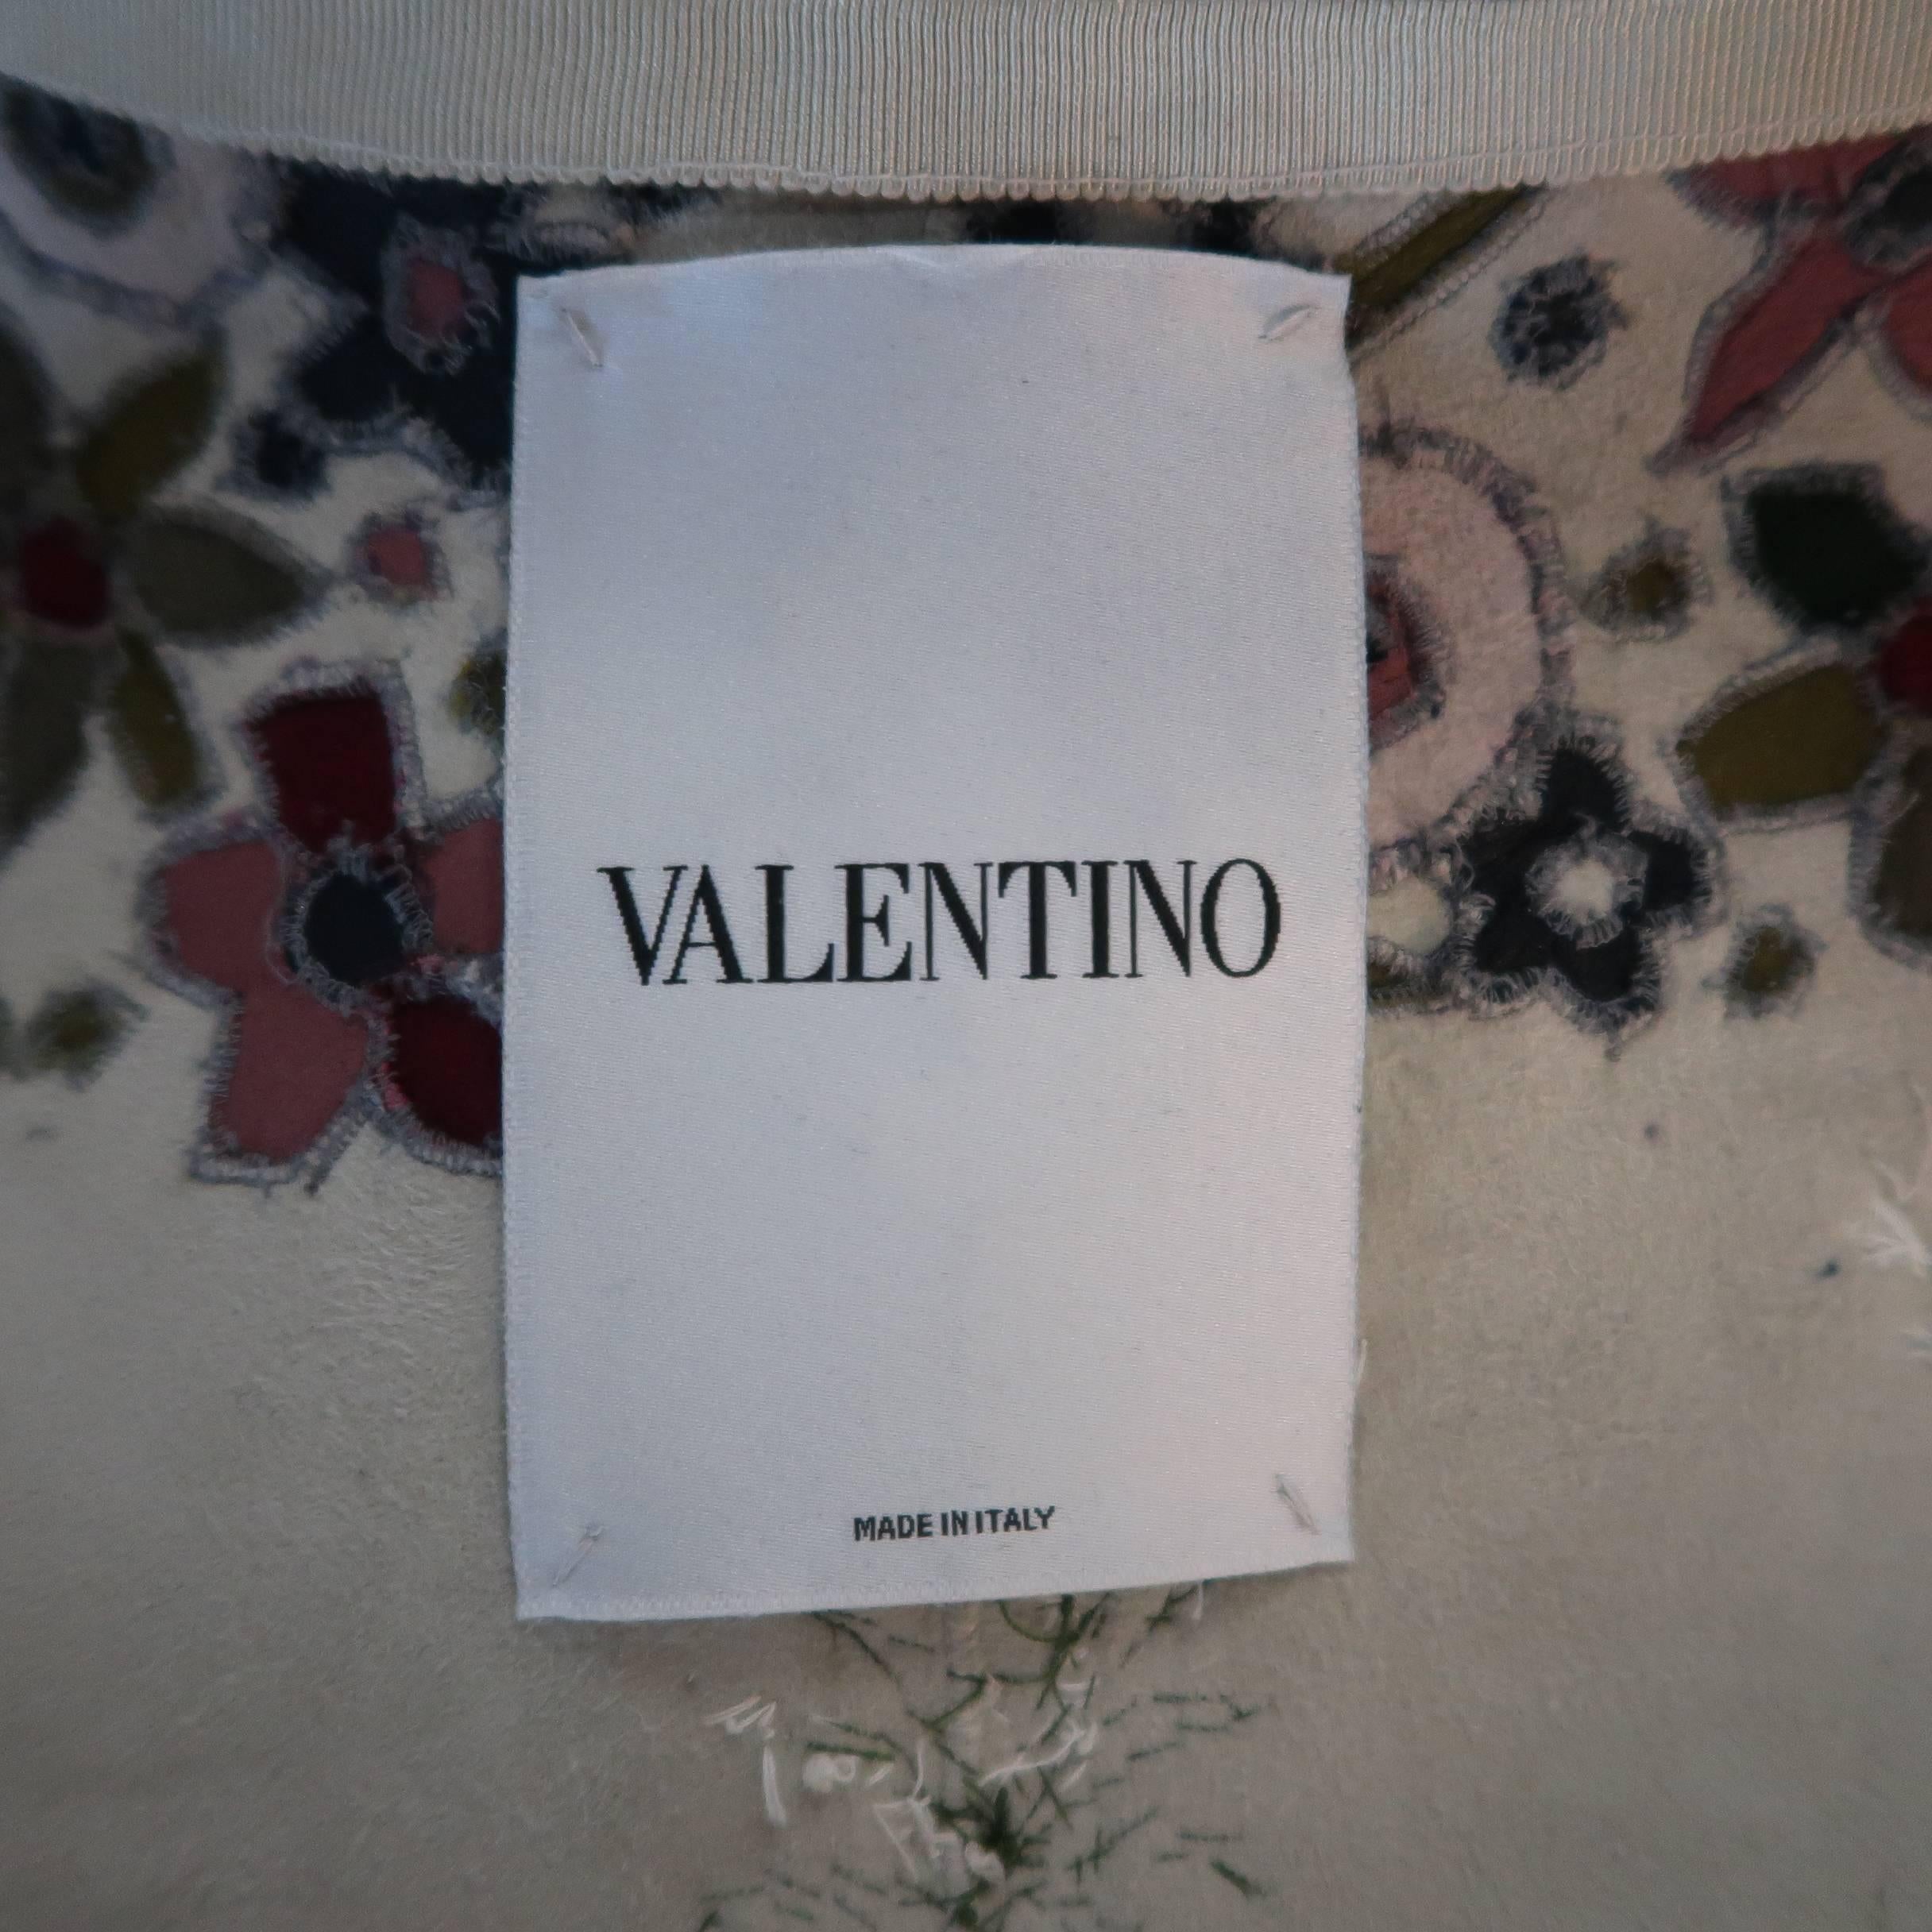 Valentino Cream Floral Shearling Vest Coat, Pre-Fall 2015 Runway 7